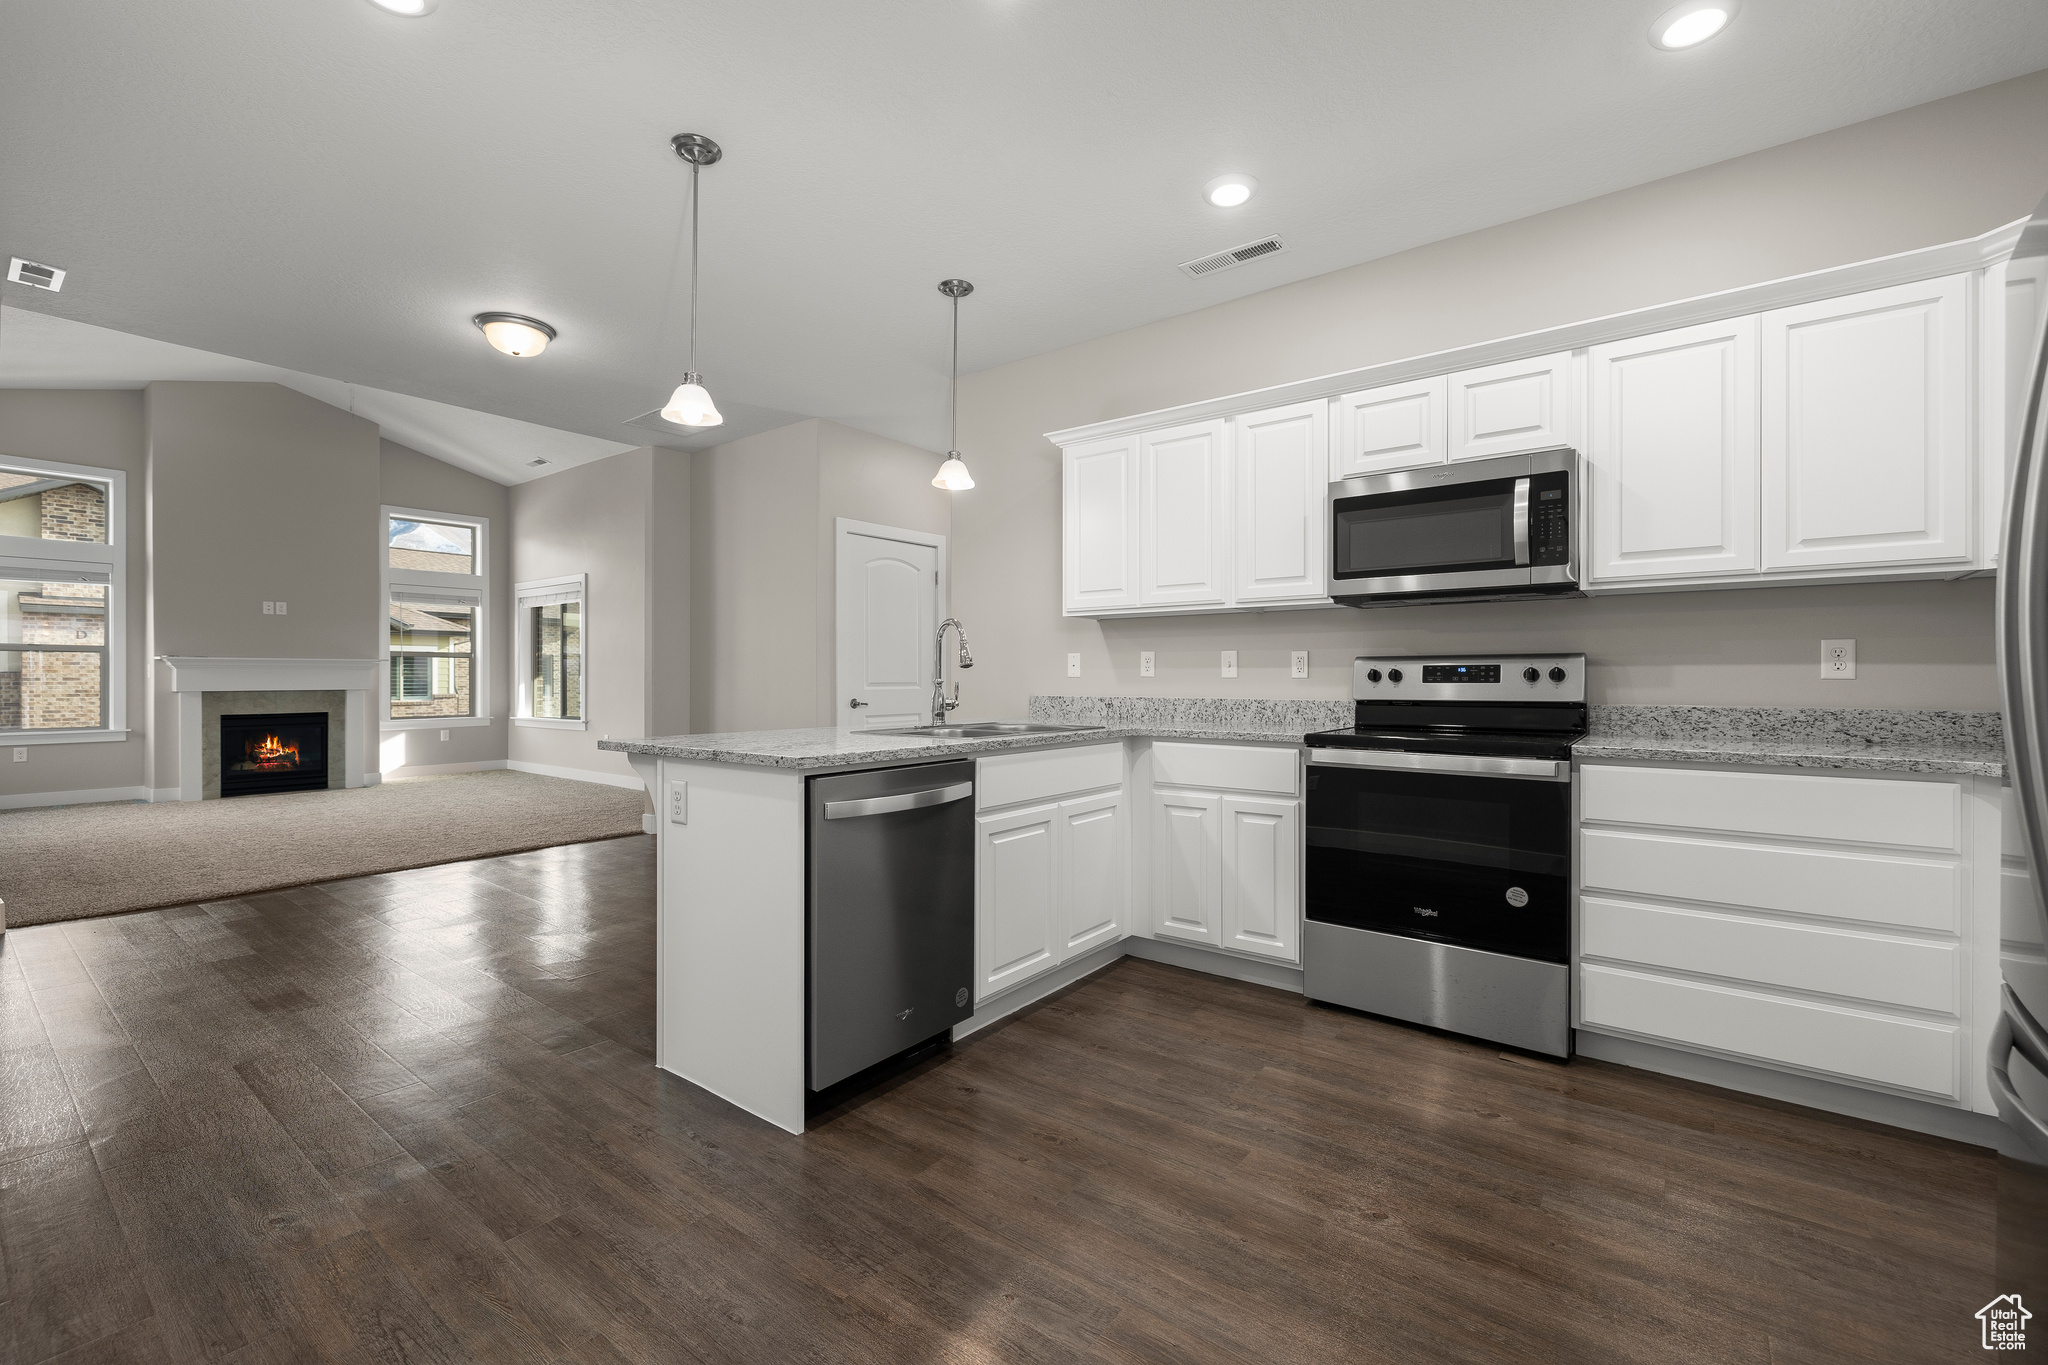 Open floor plans with bright white kitchen